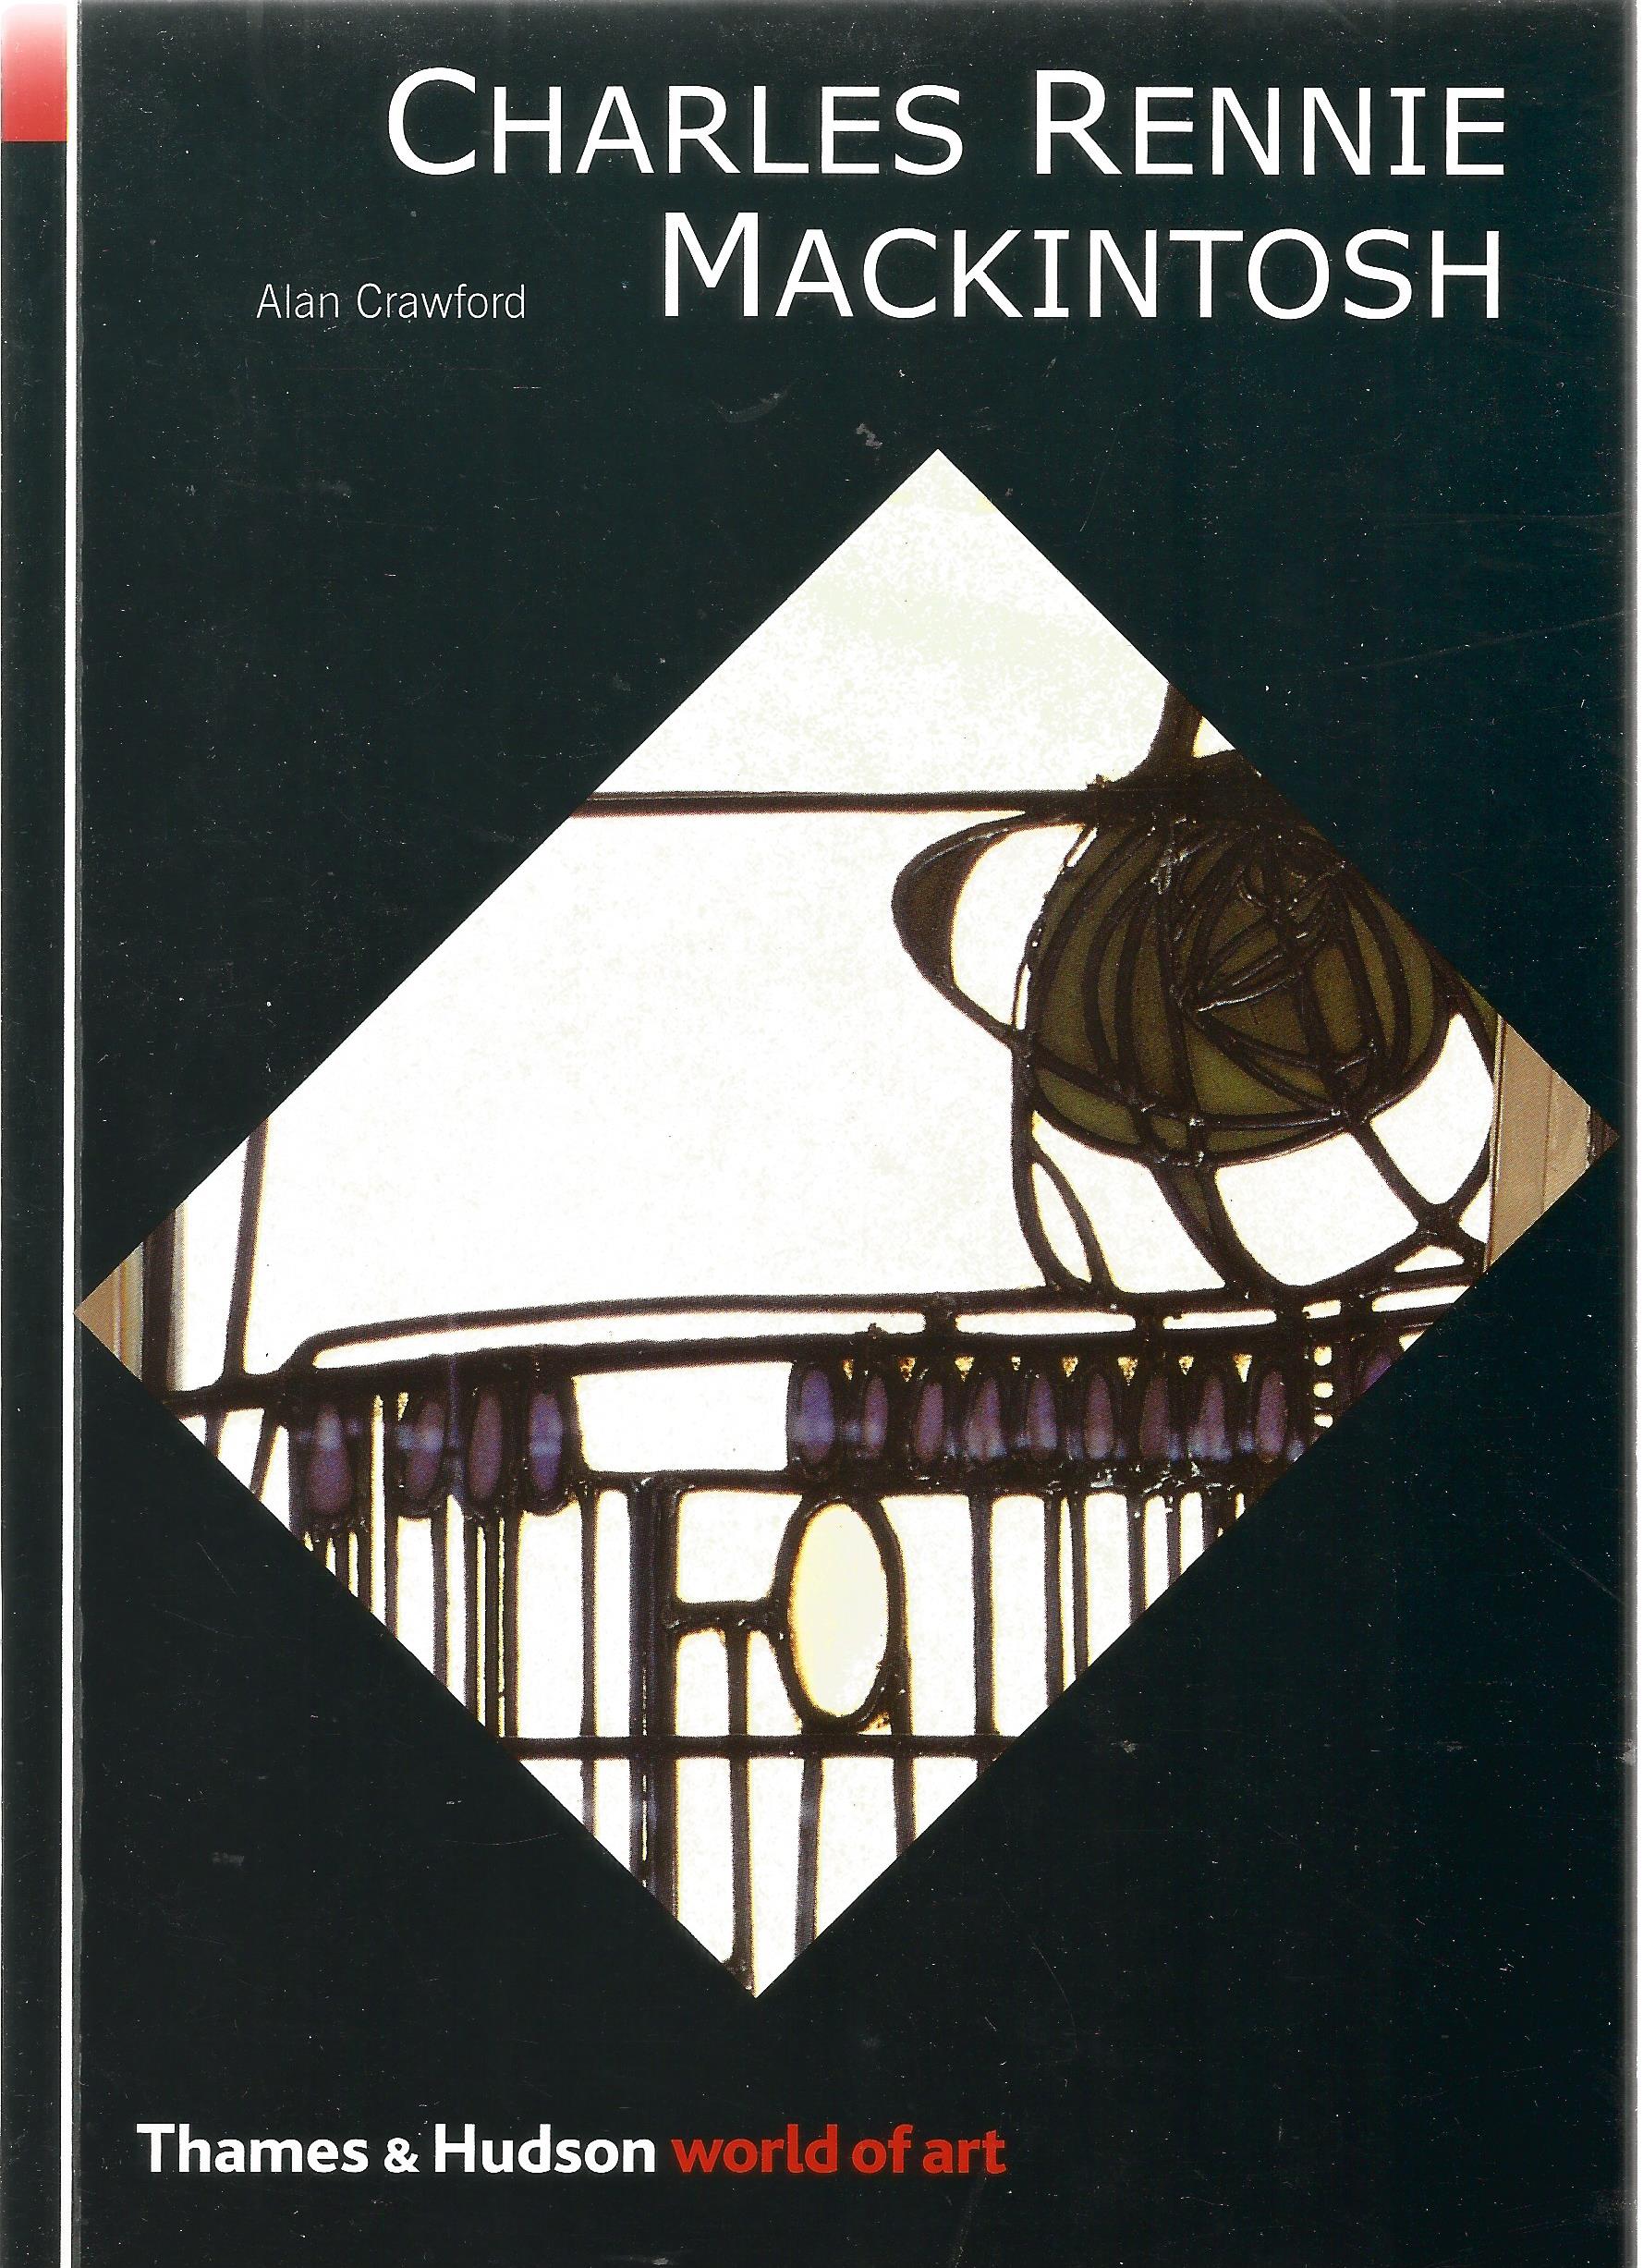 Alan Crawford softback book Charles Rennie Mackintosh 2002 published by Thames & Hudson Ltd in